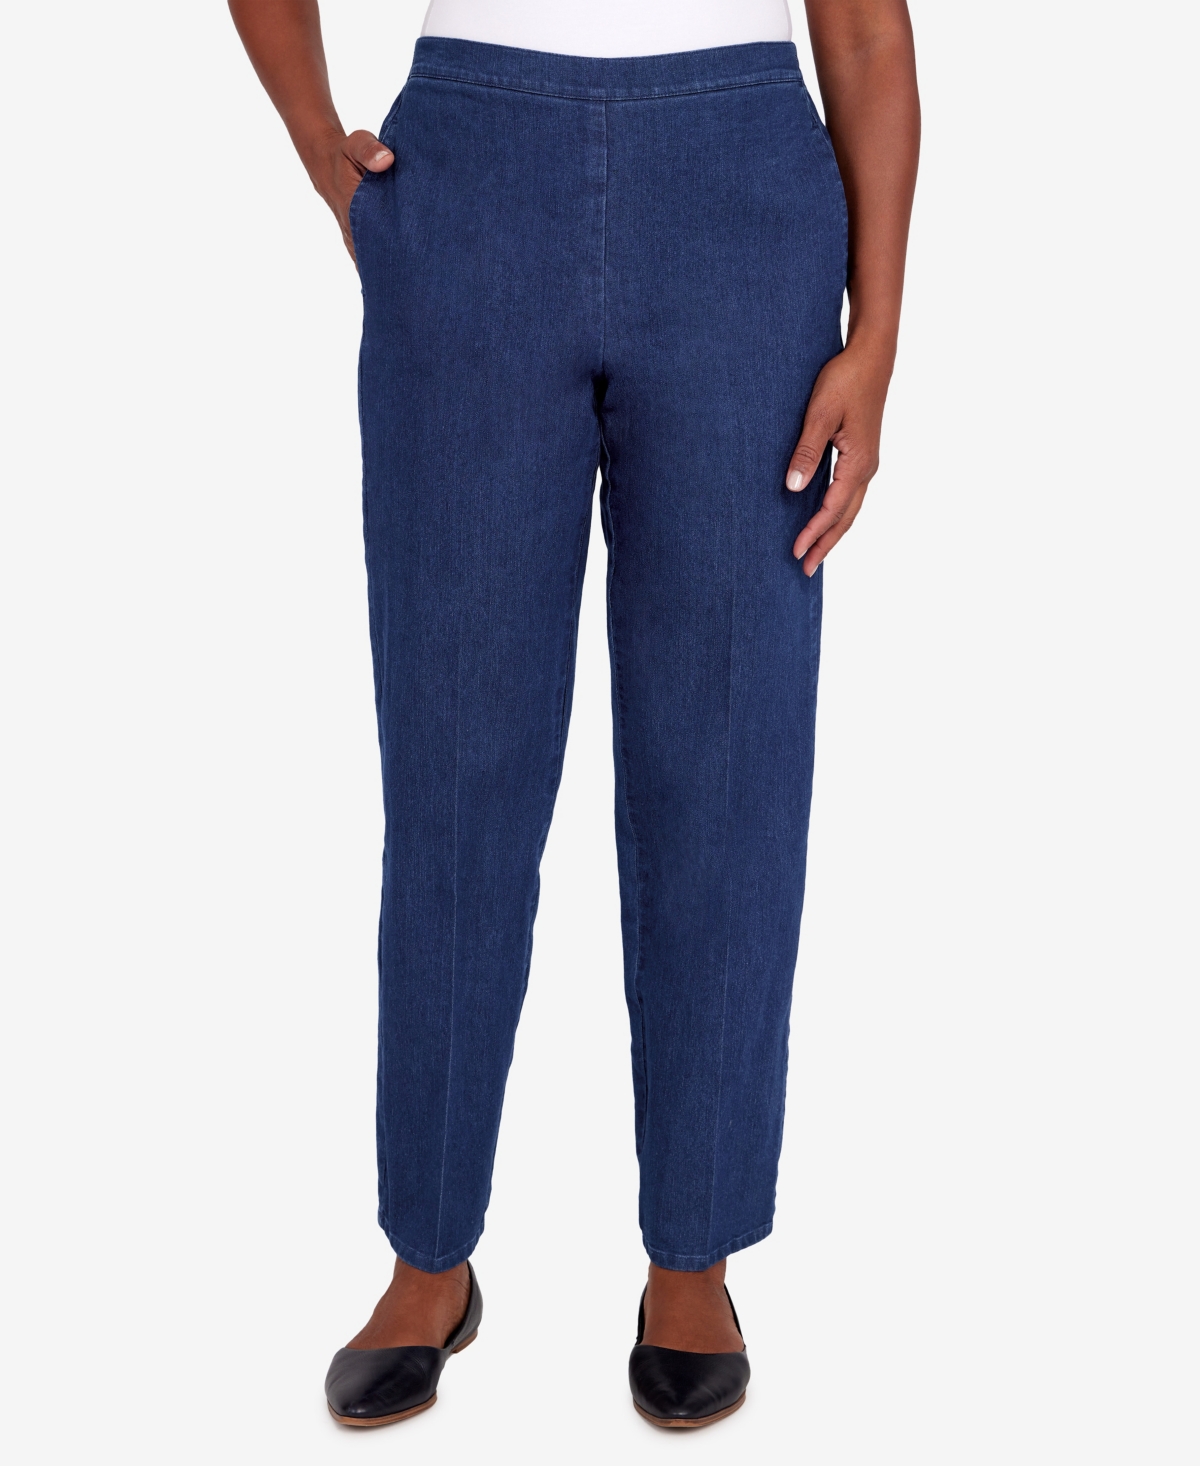  Alfred Dunner Women's Bright Idea Dark Wash Denim Short Length Jeans